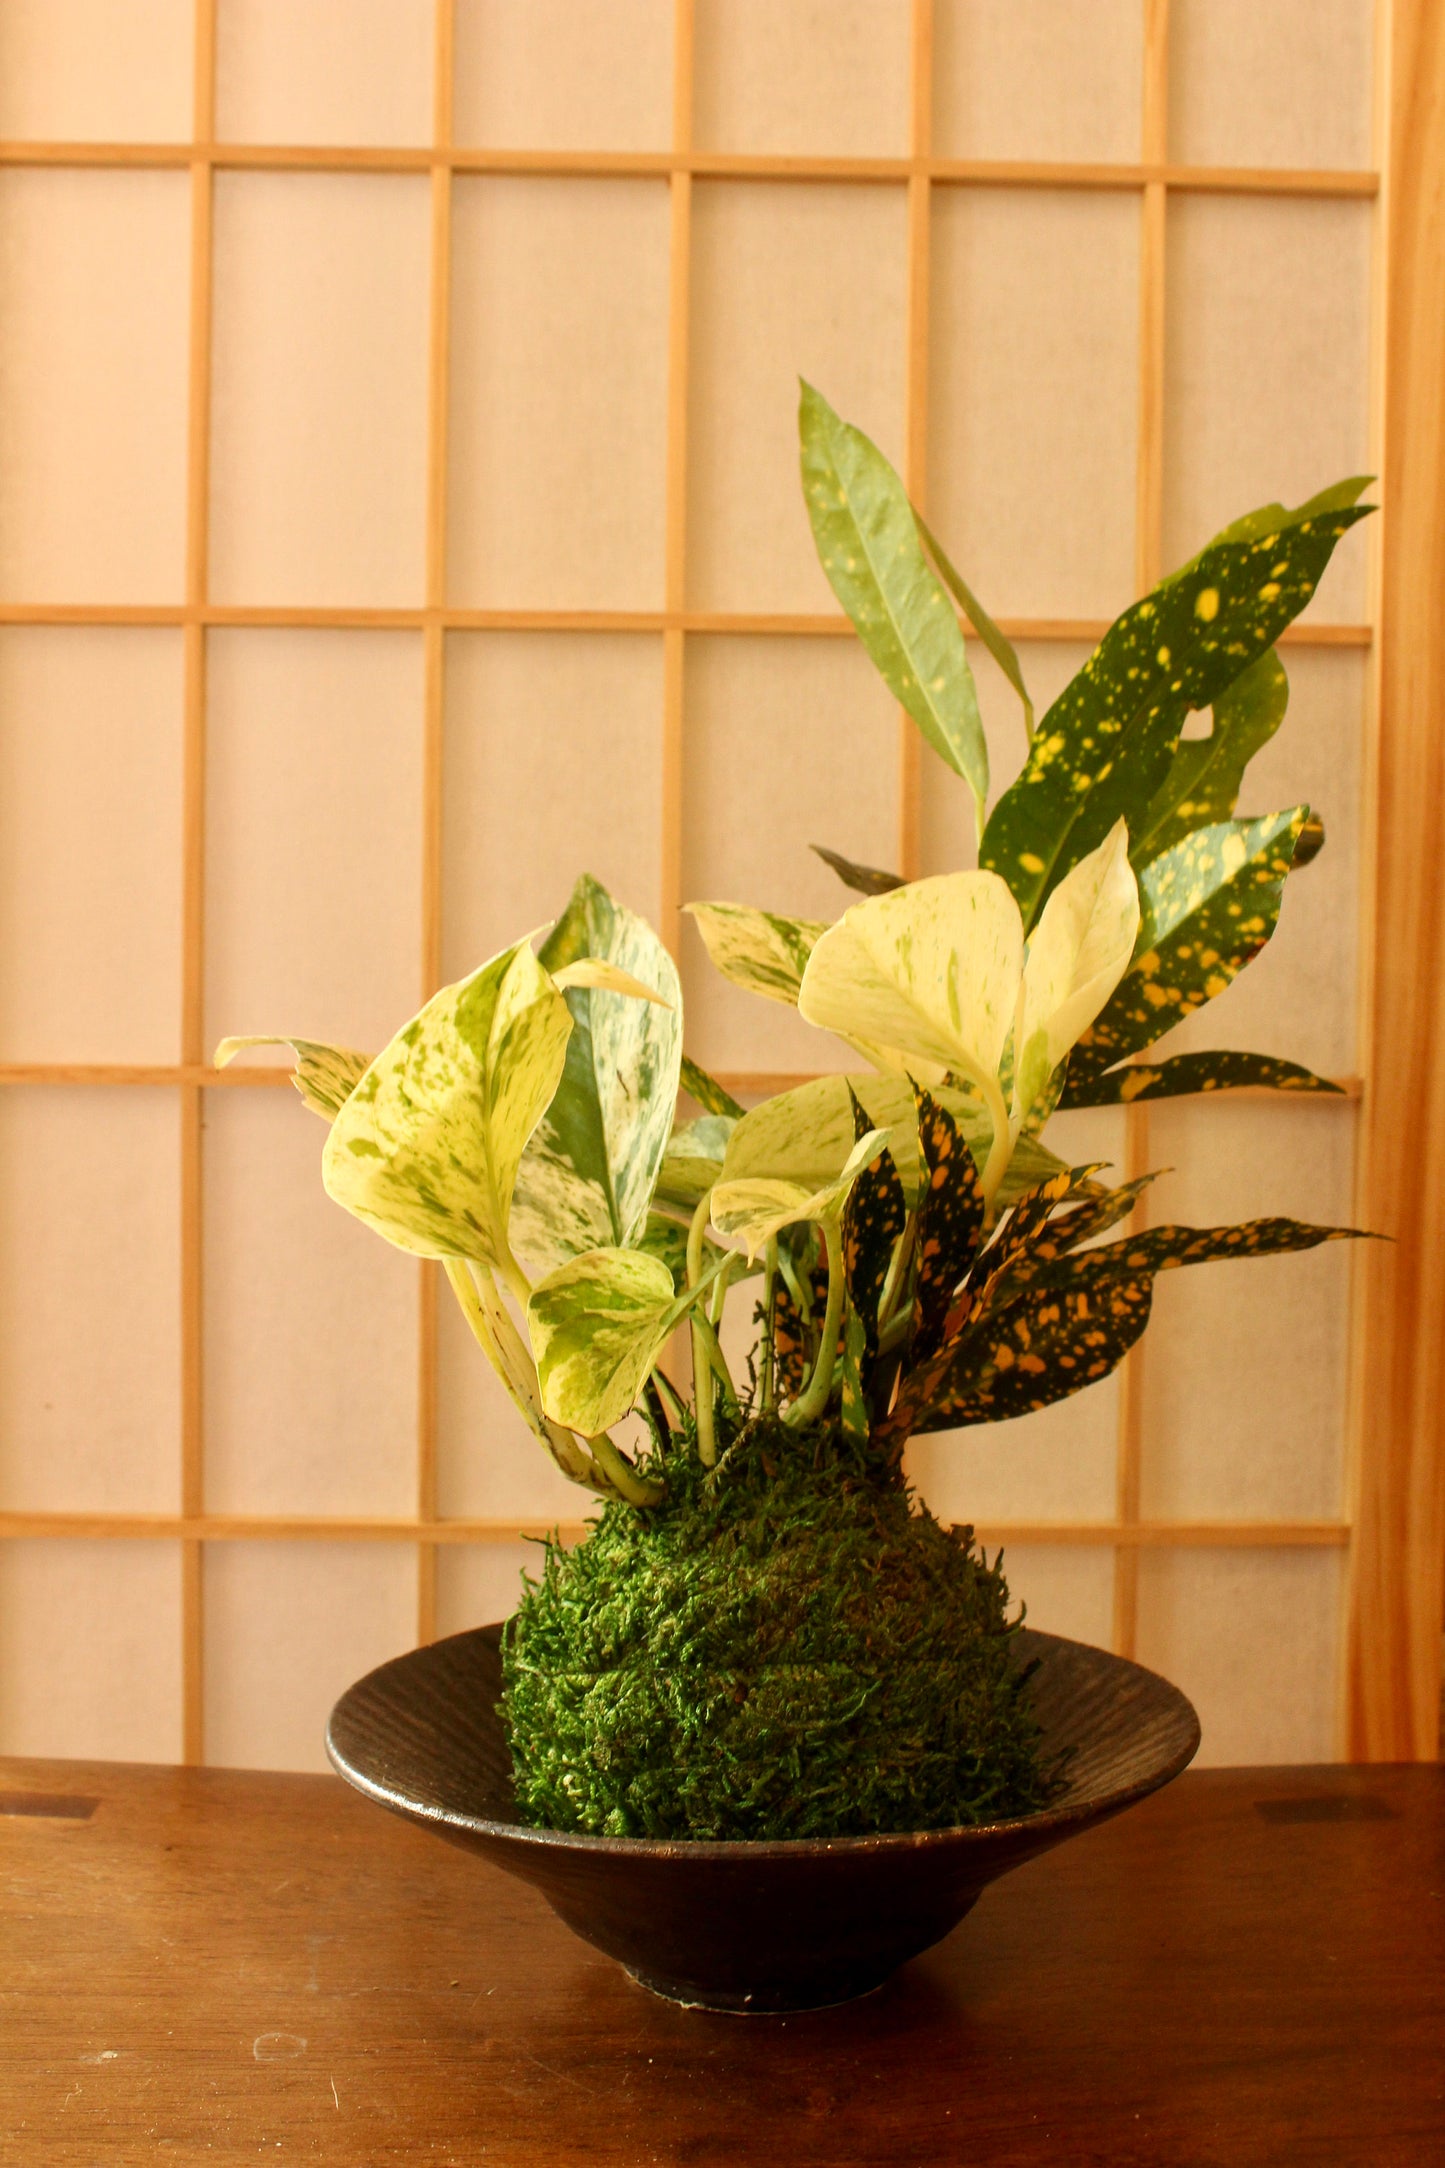 Pothos & Croton arranged  Kokedama - Moss ball, Living Japanese art, spin off of Bonsai!